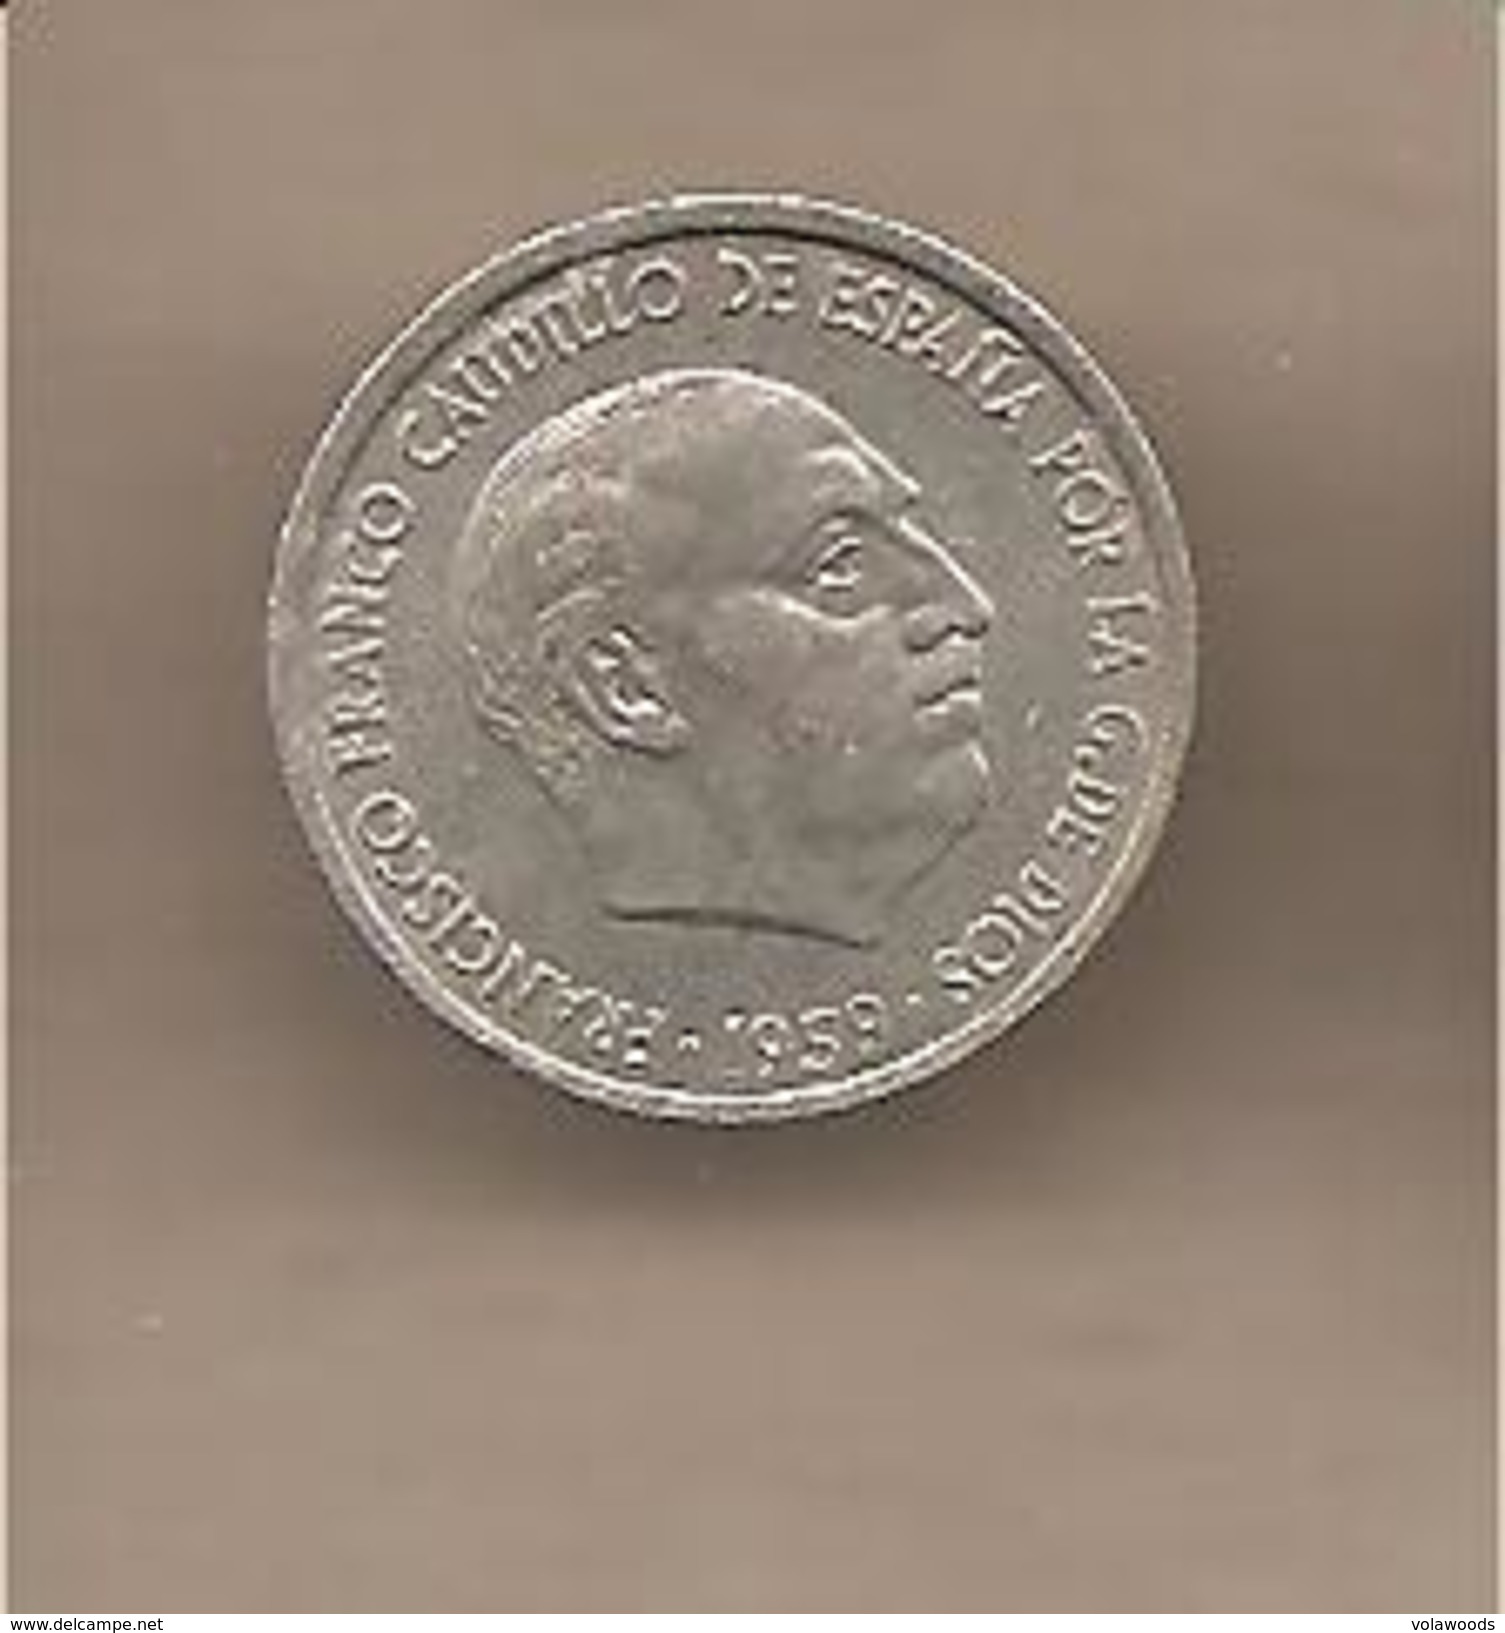 Spagna - Moneta Circolata Da 10 Centesimi - 1959 - 10 Centesimi